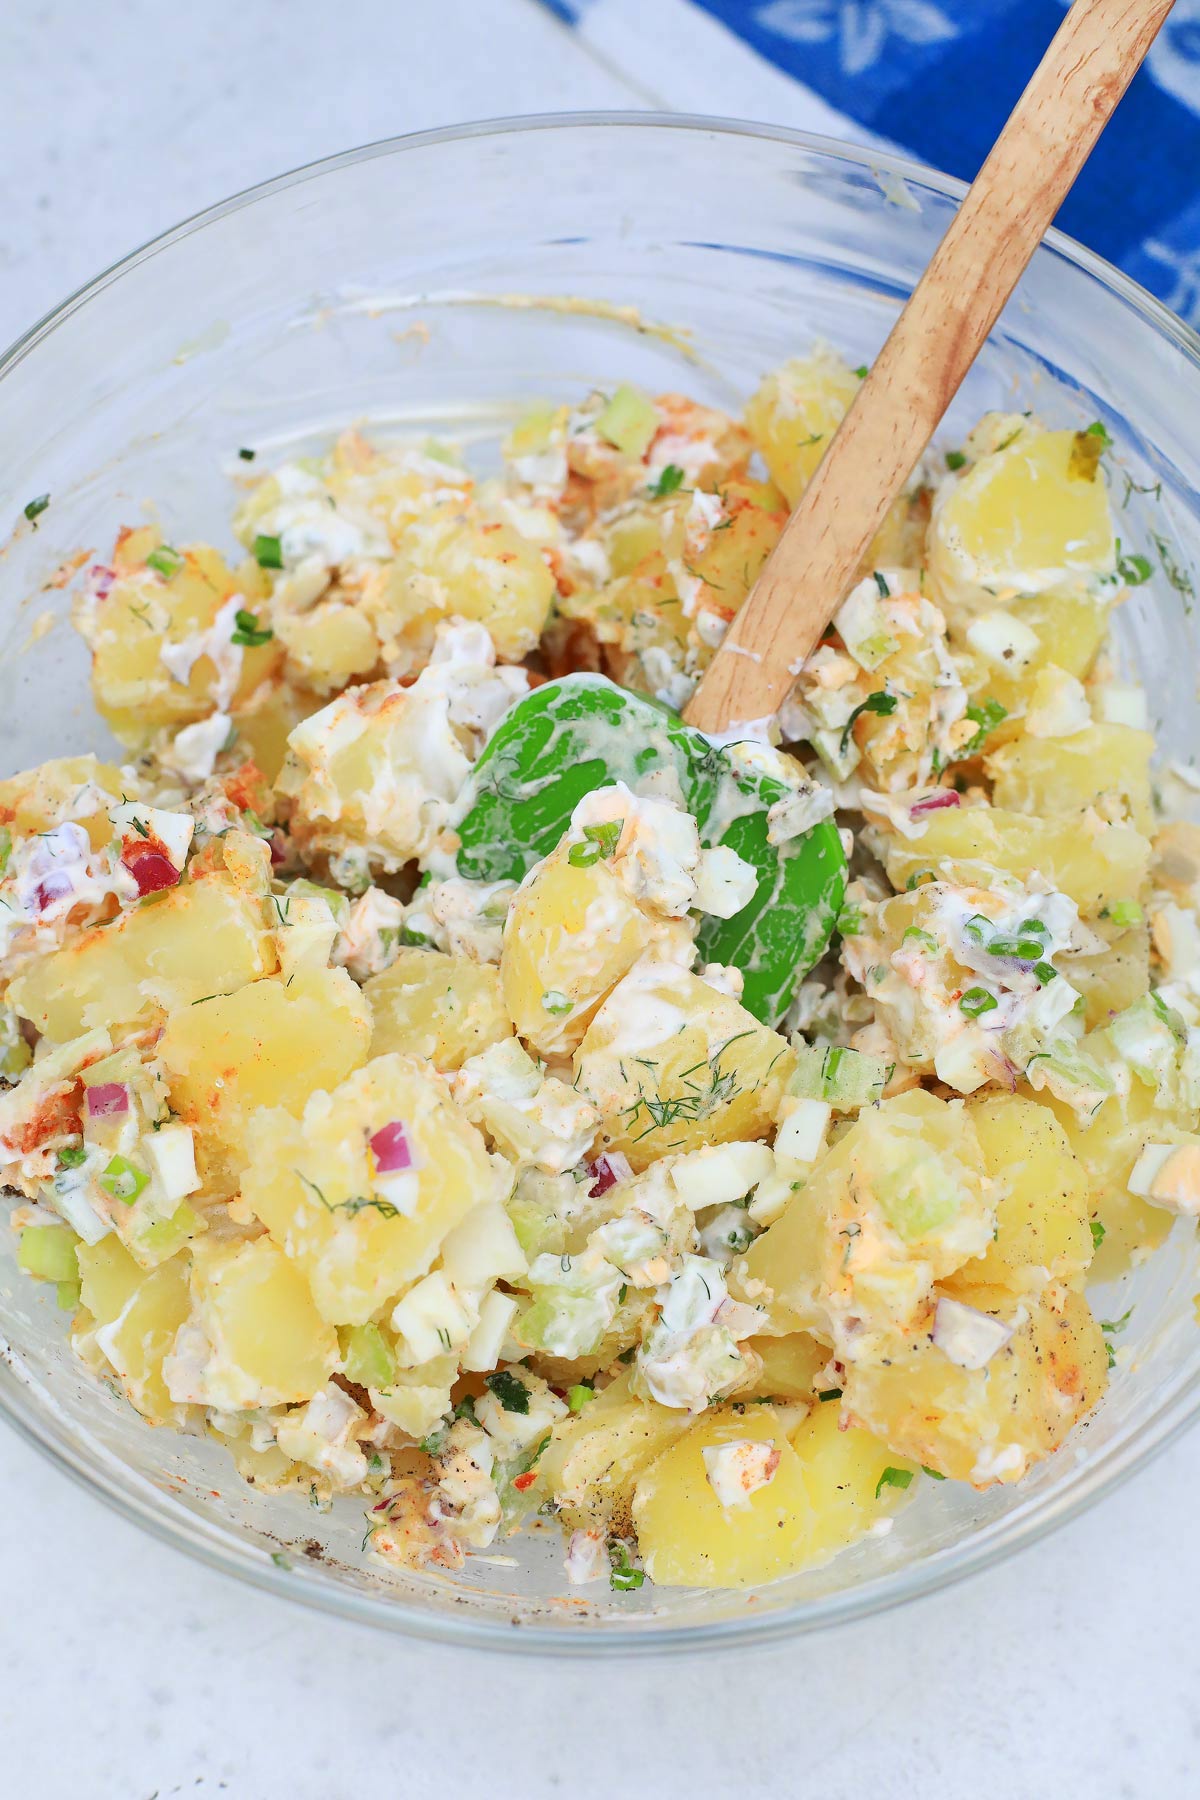 Mixing potato salad